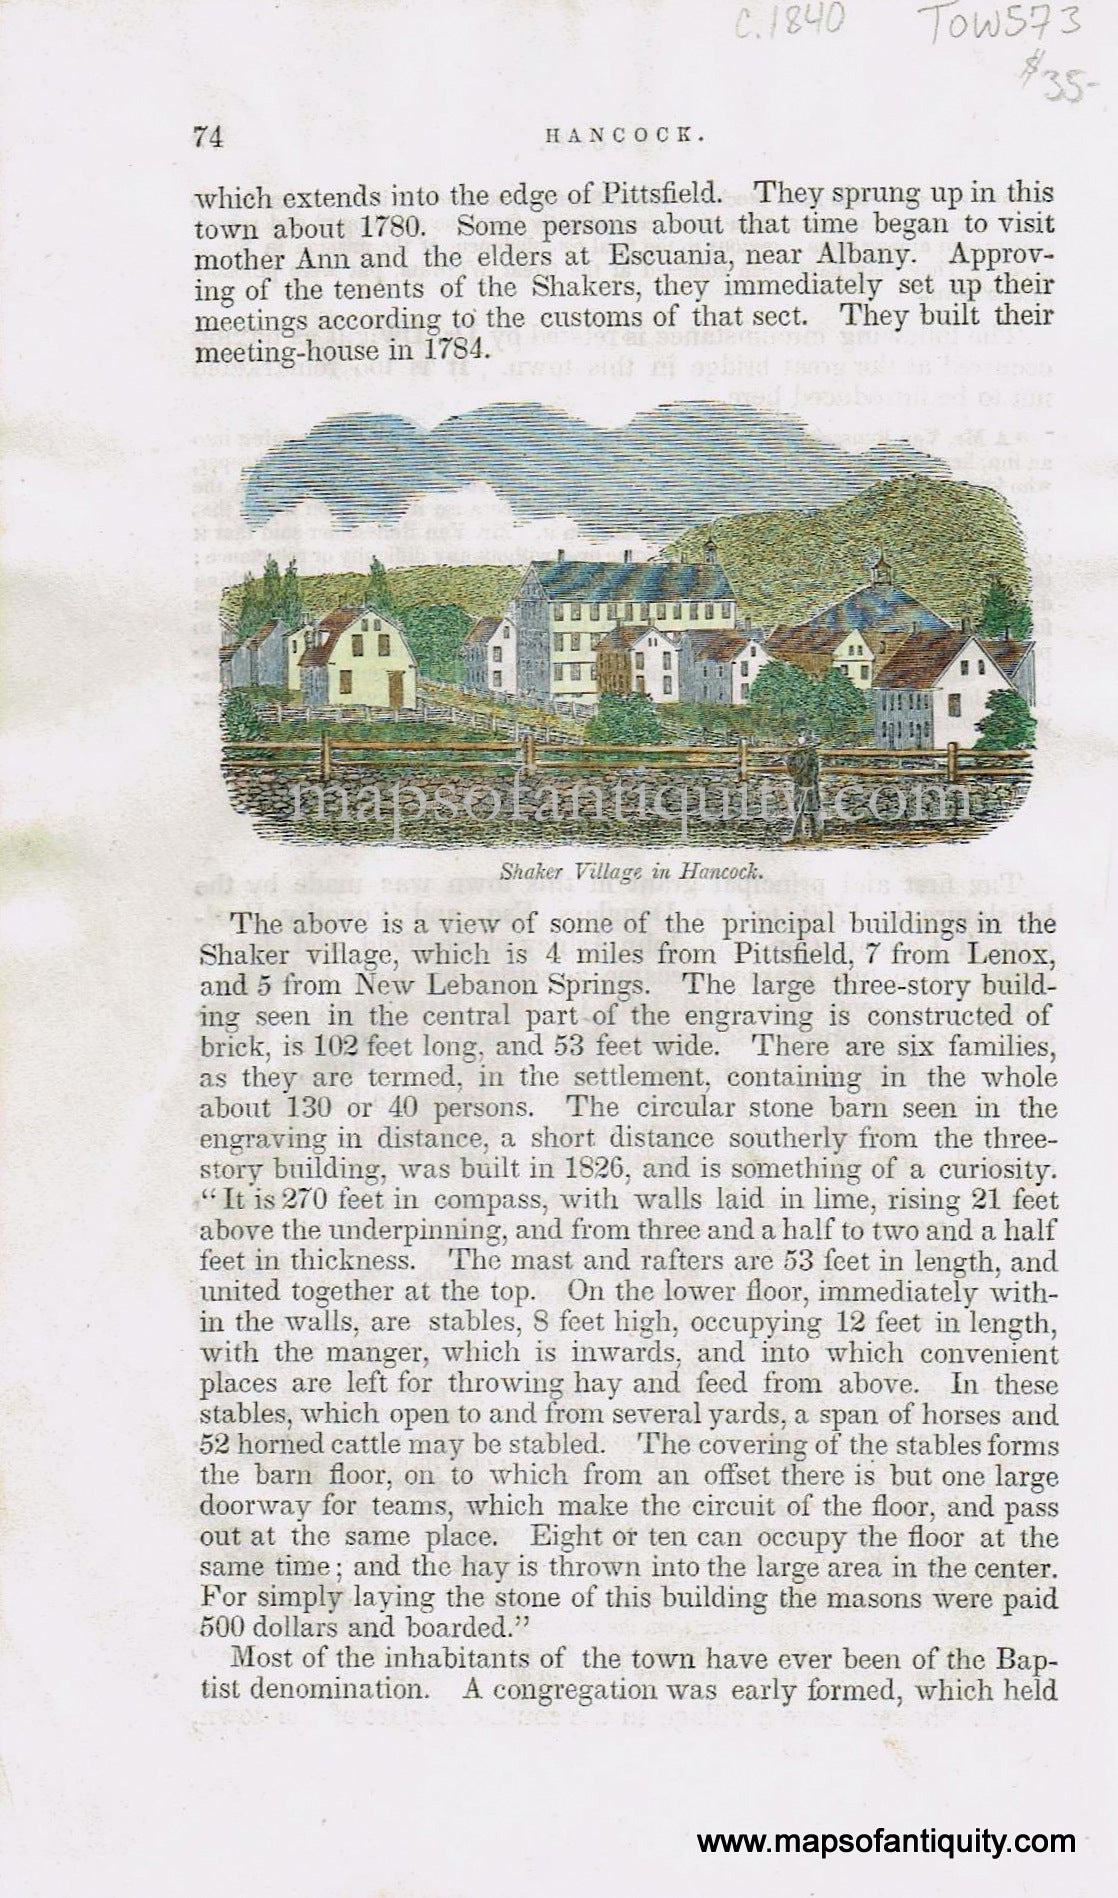 Hand-Colored-Antique-Illustration-Shaker-Village-in-Hancock-c.-1840-Barber-Hancock-1800s-19th-century-Maps-of-Antiquity